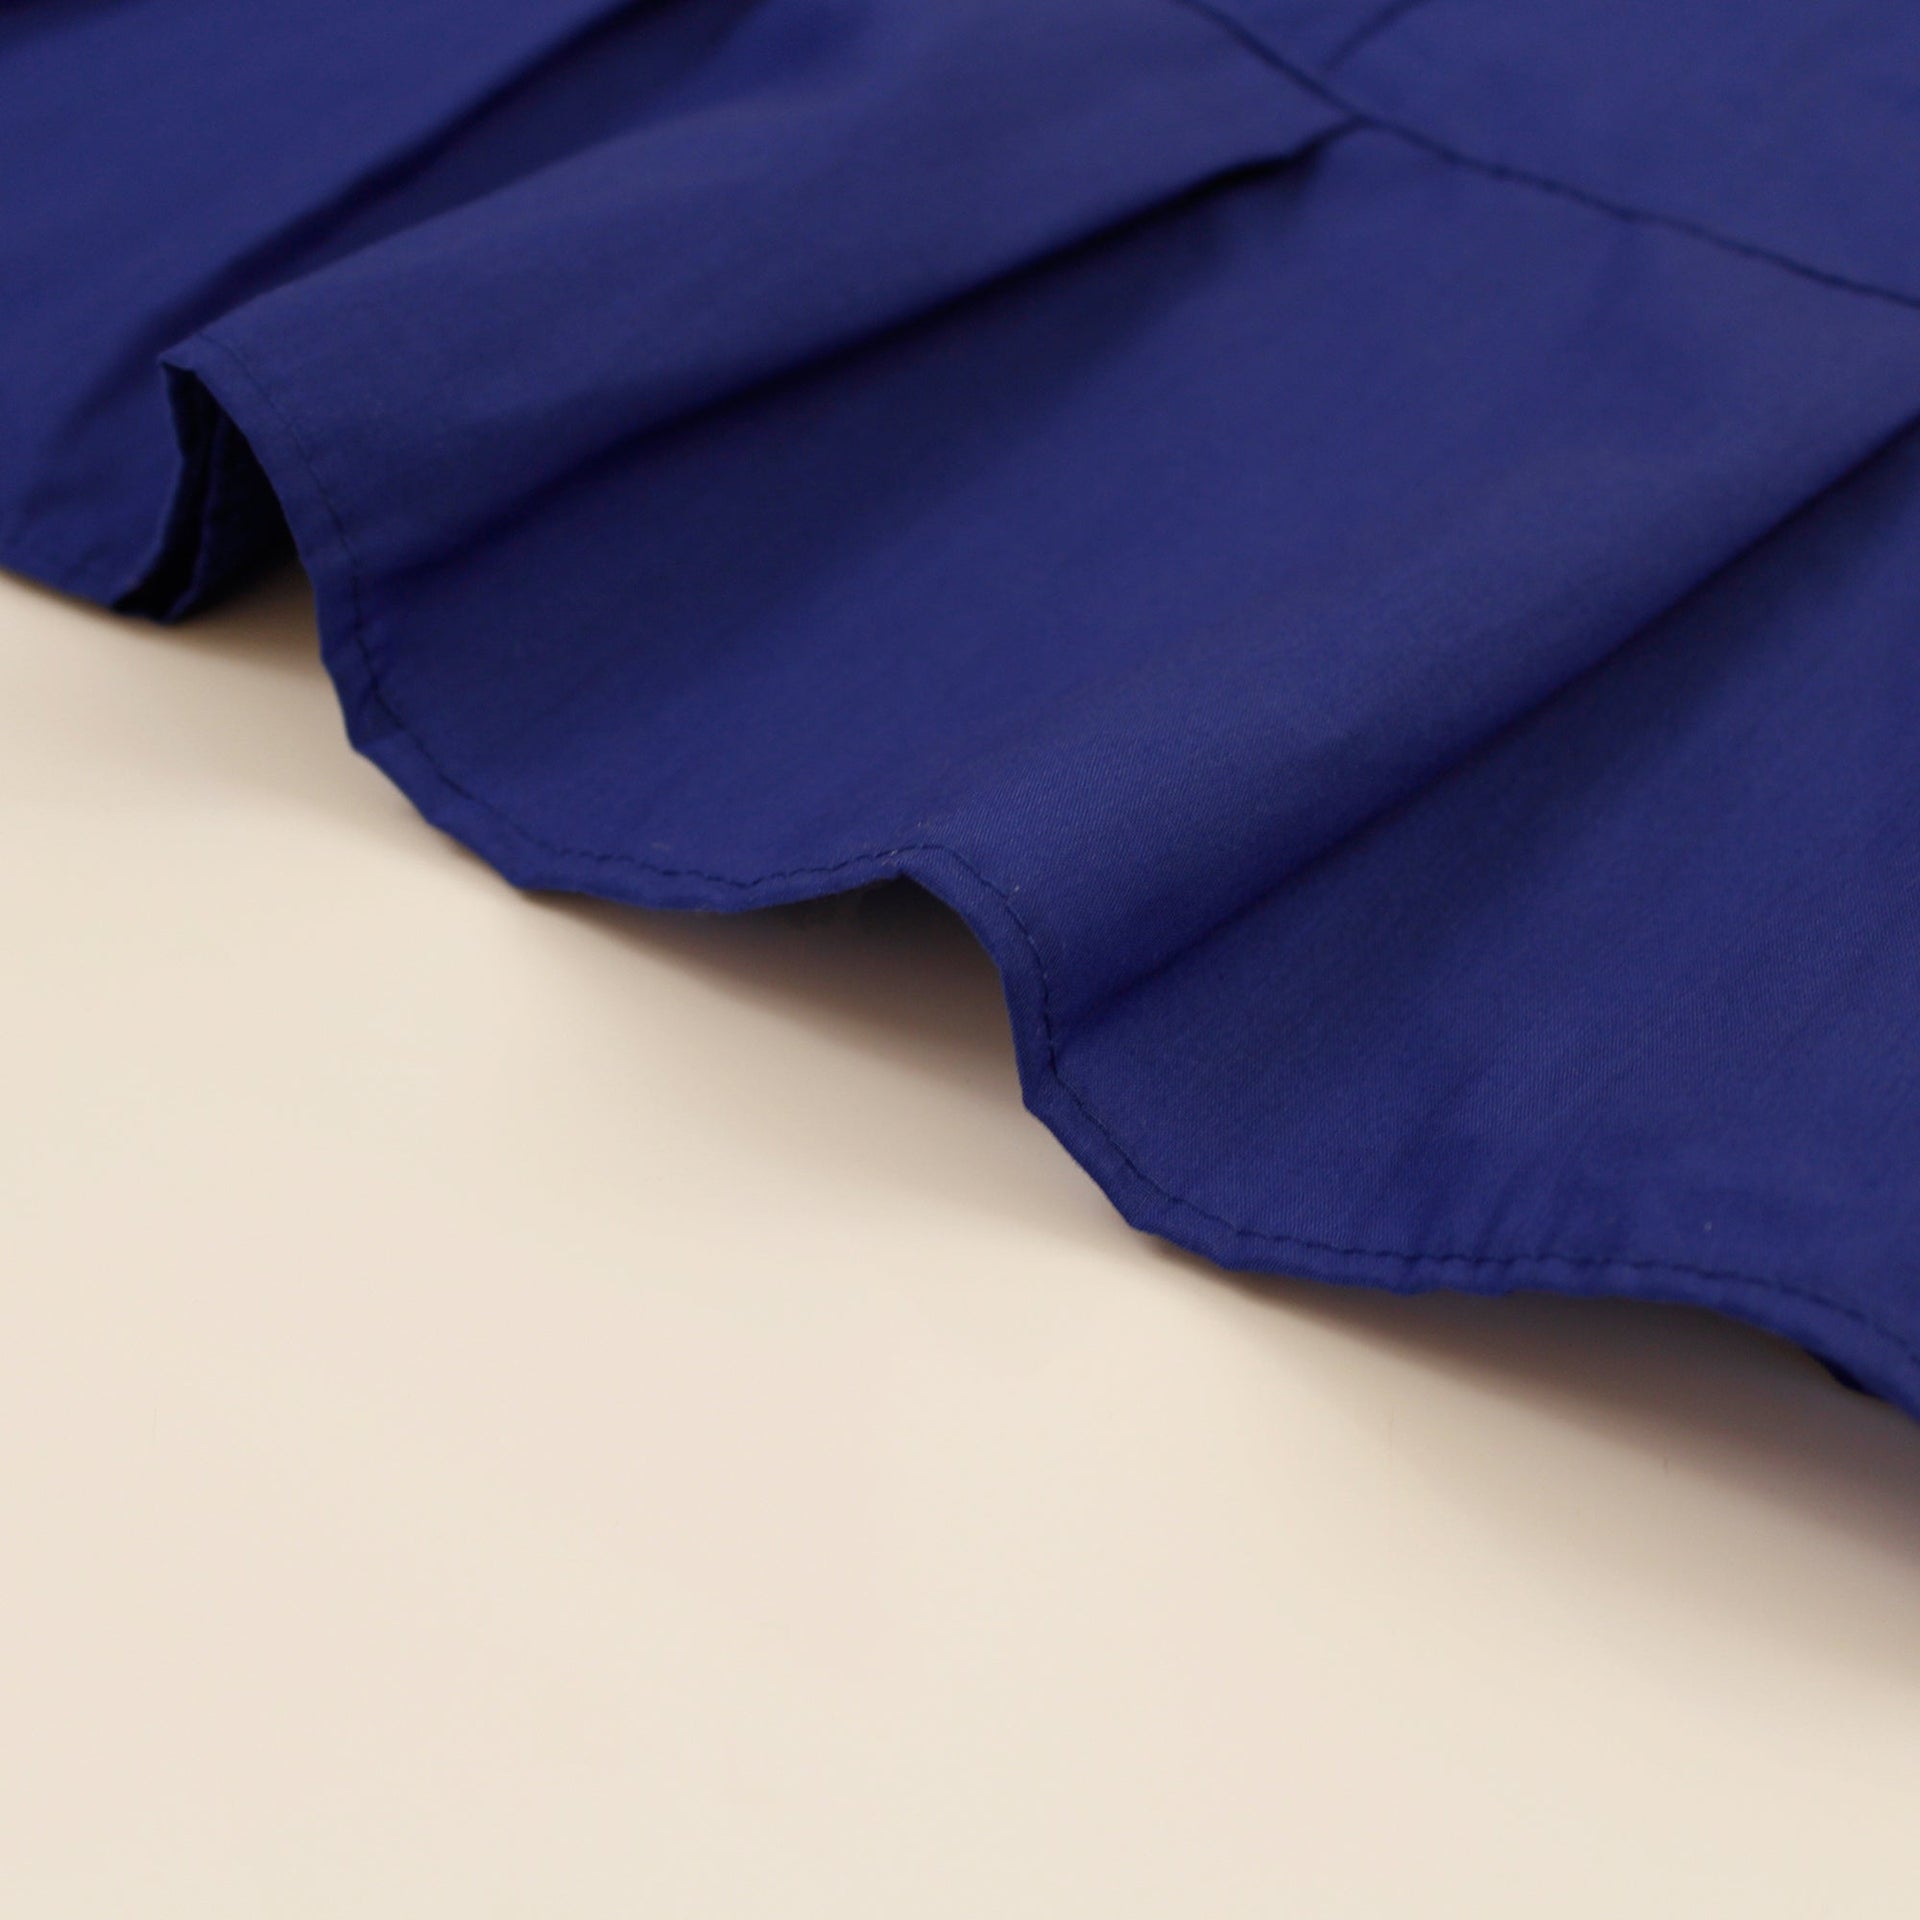 EEQ-4299 - Blue & Black petticoat Saree